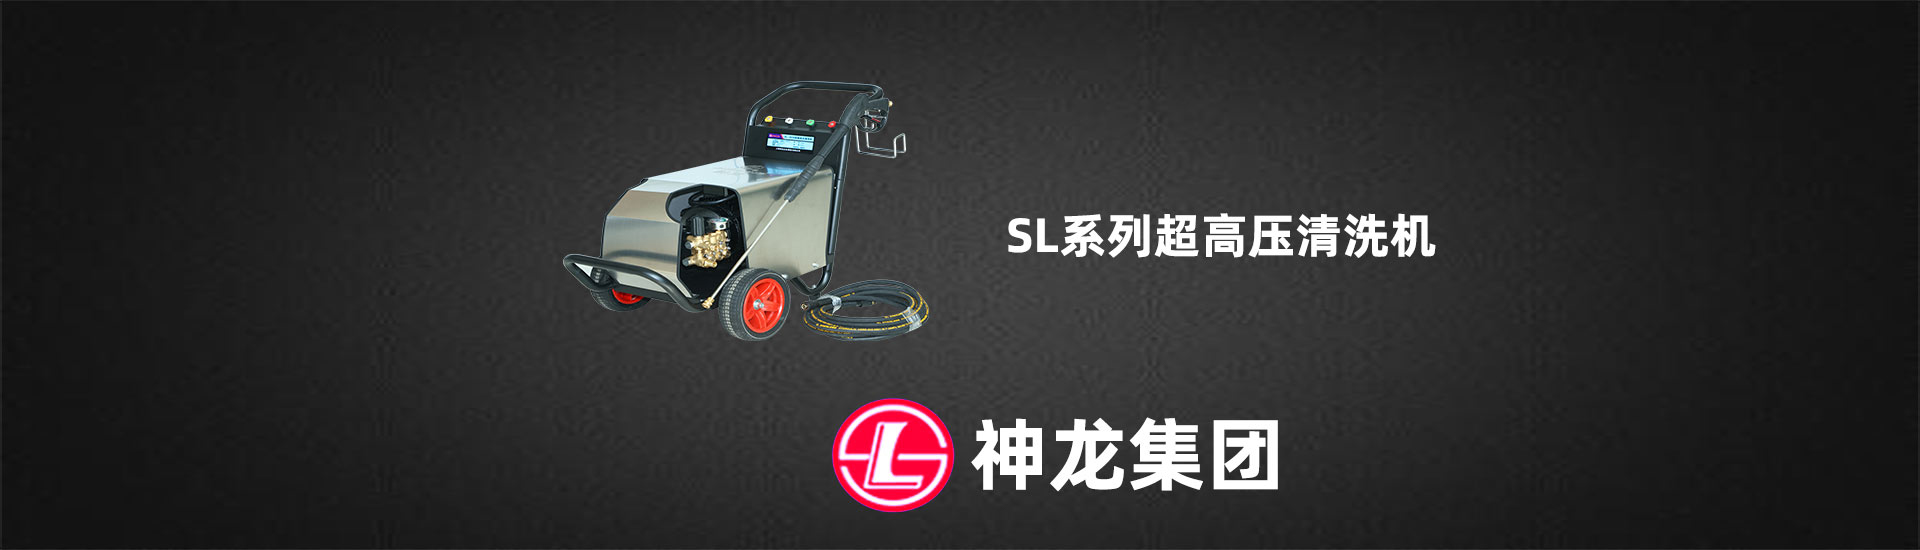 SL-3015、3521、5022型清洗机-第一张幻灯大图